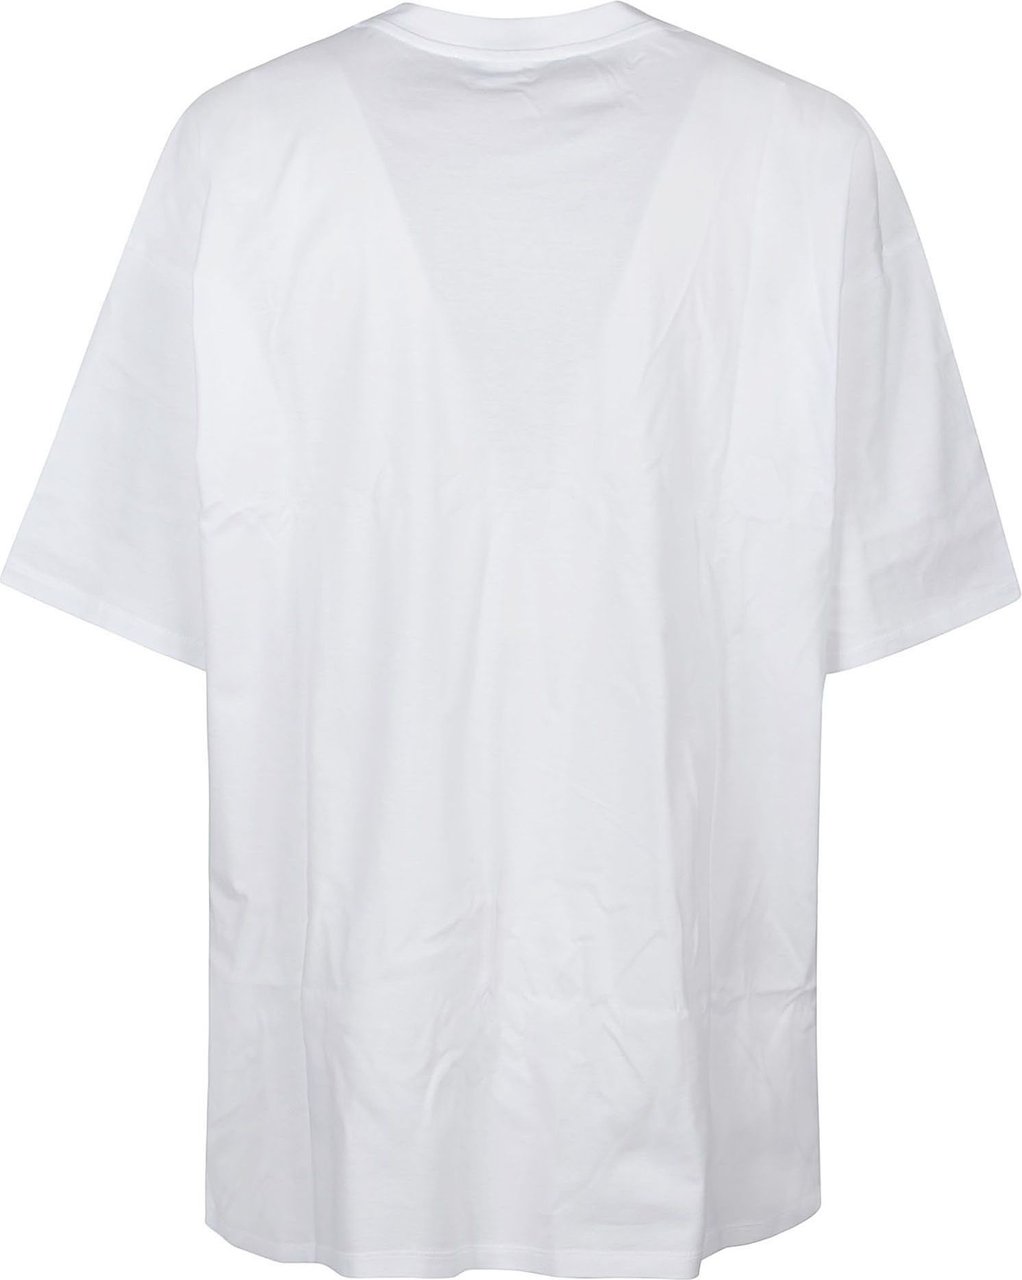 Max Mara Tacco T-shirt White Wit